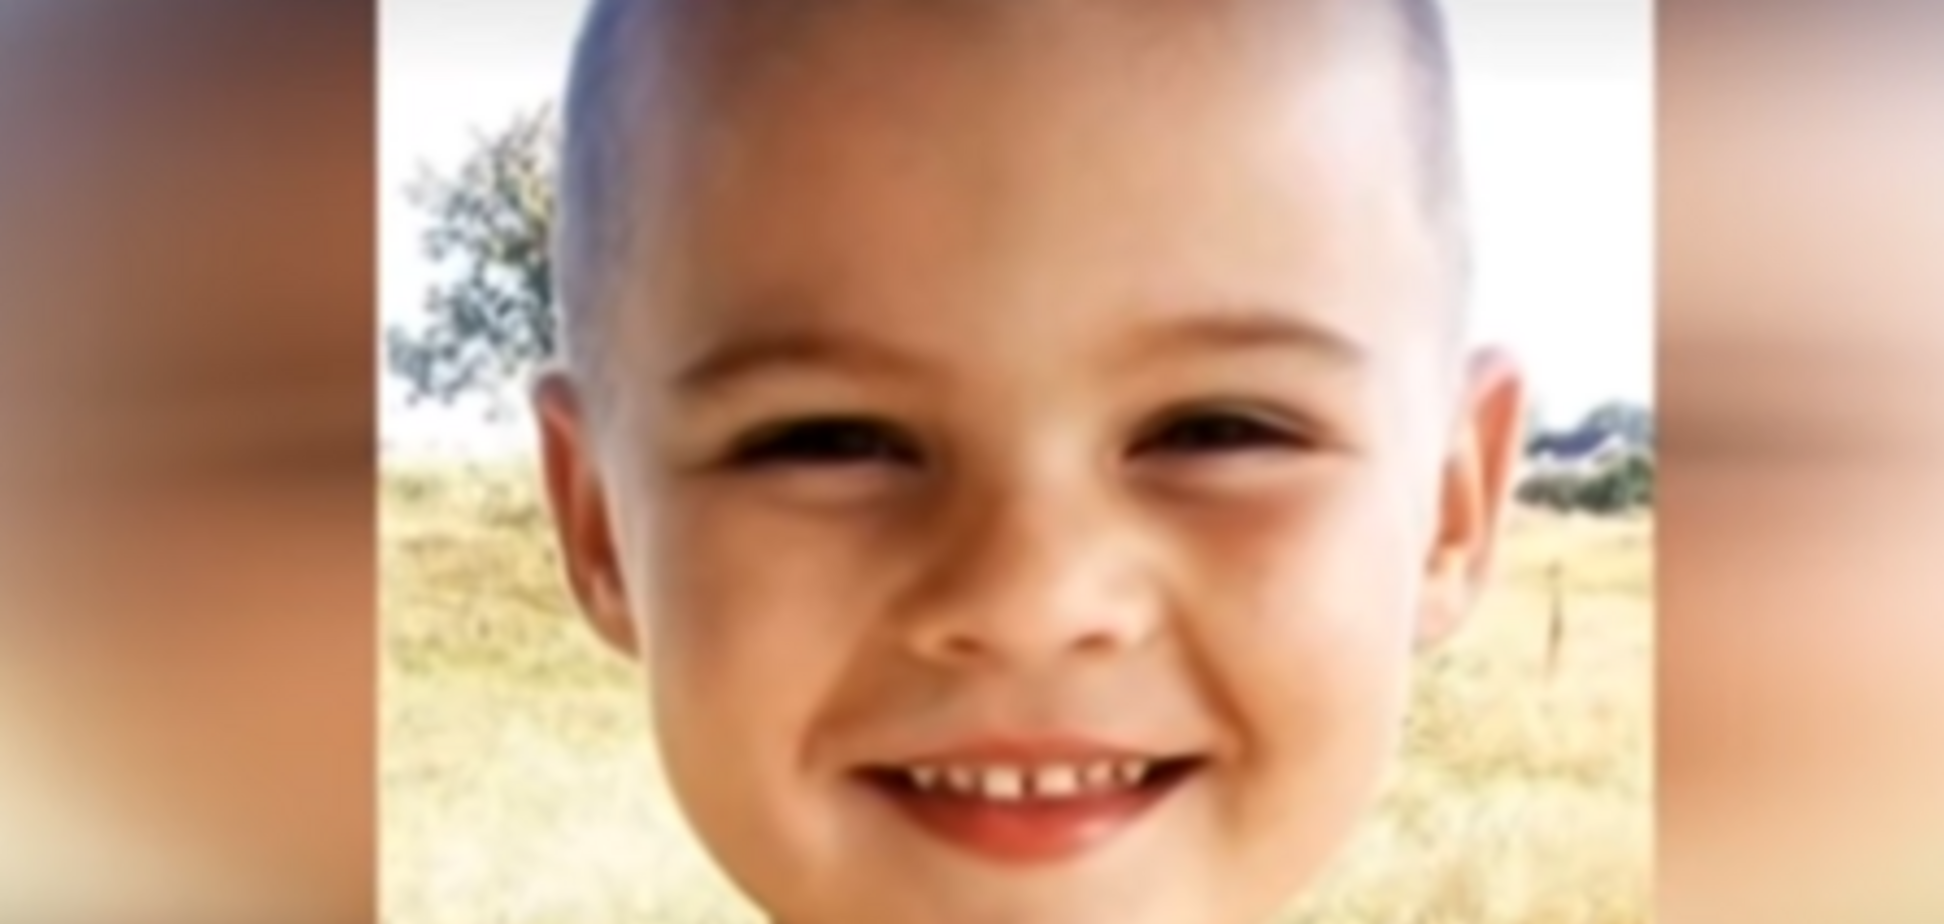 На Хмельнитчине от 'витаминов' внезапно умер 4-летний ребенок: видео